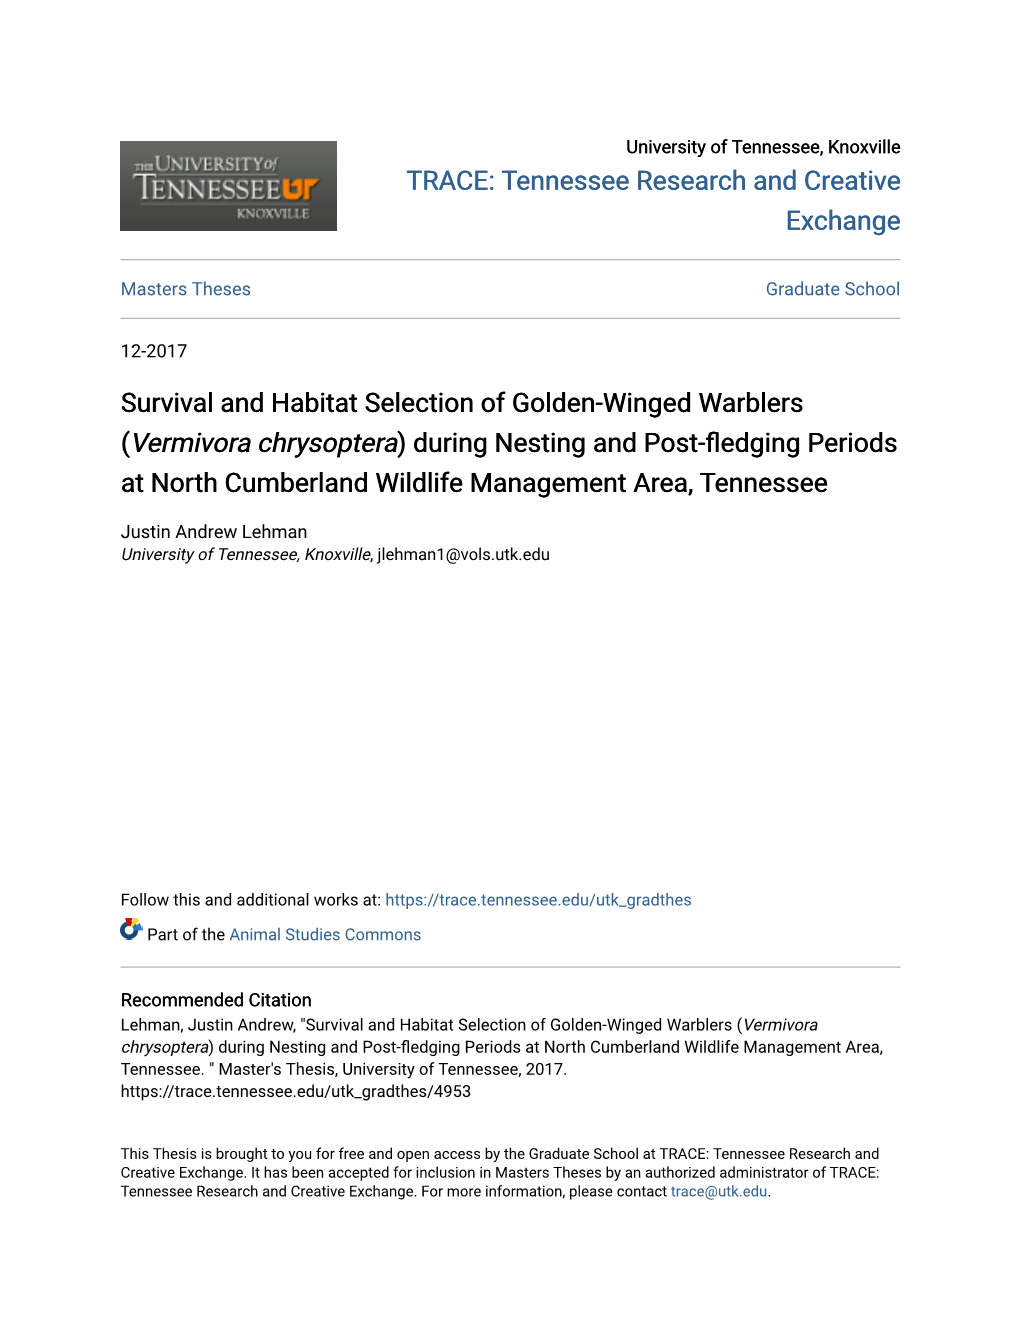 Survival and Habitat Selection of Golden-Winged Warblers (&lt;I